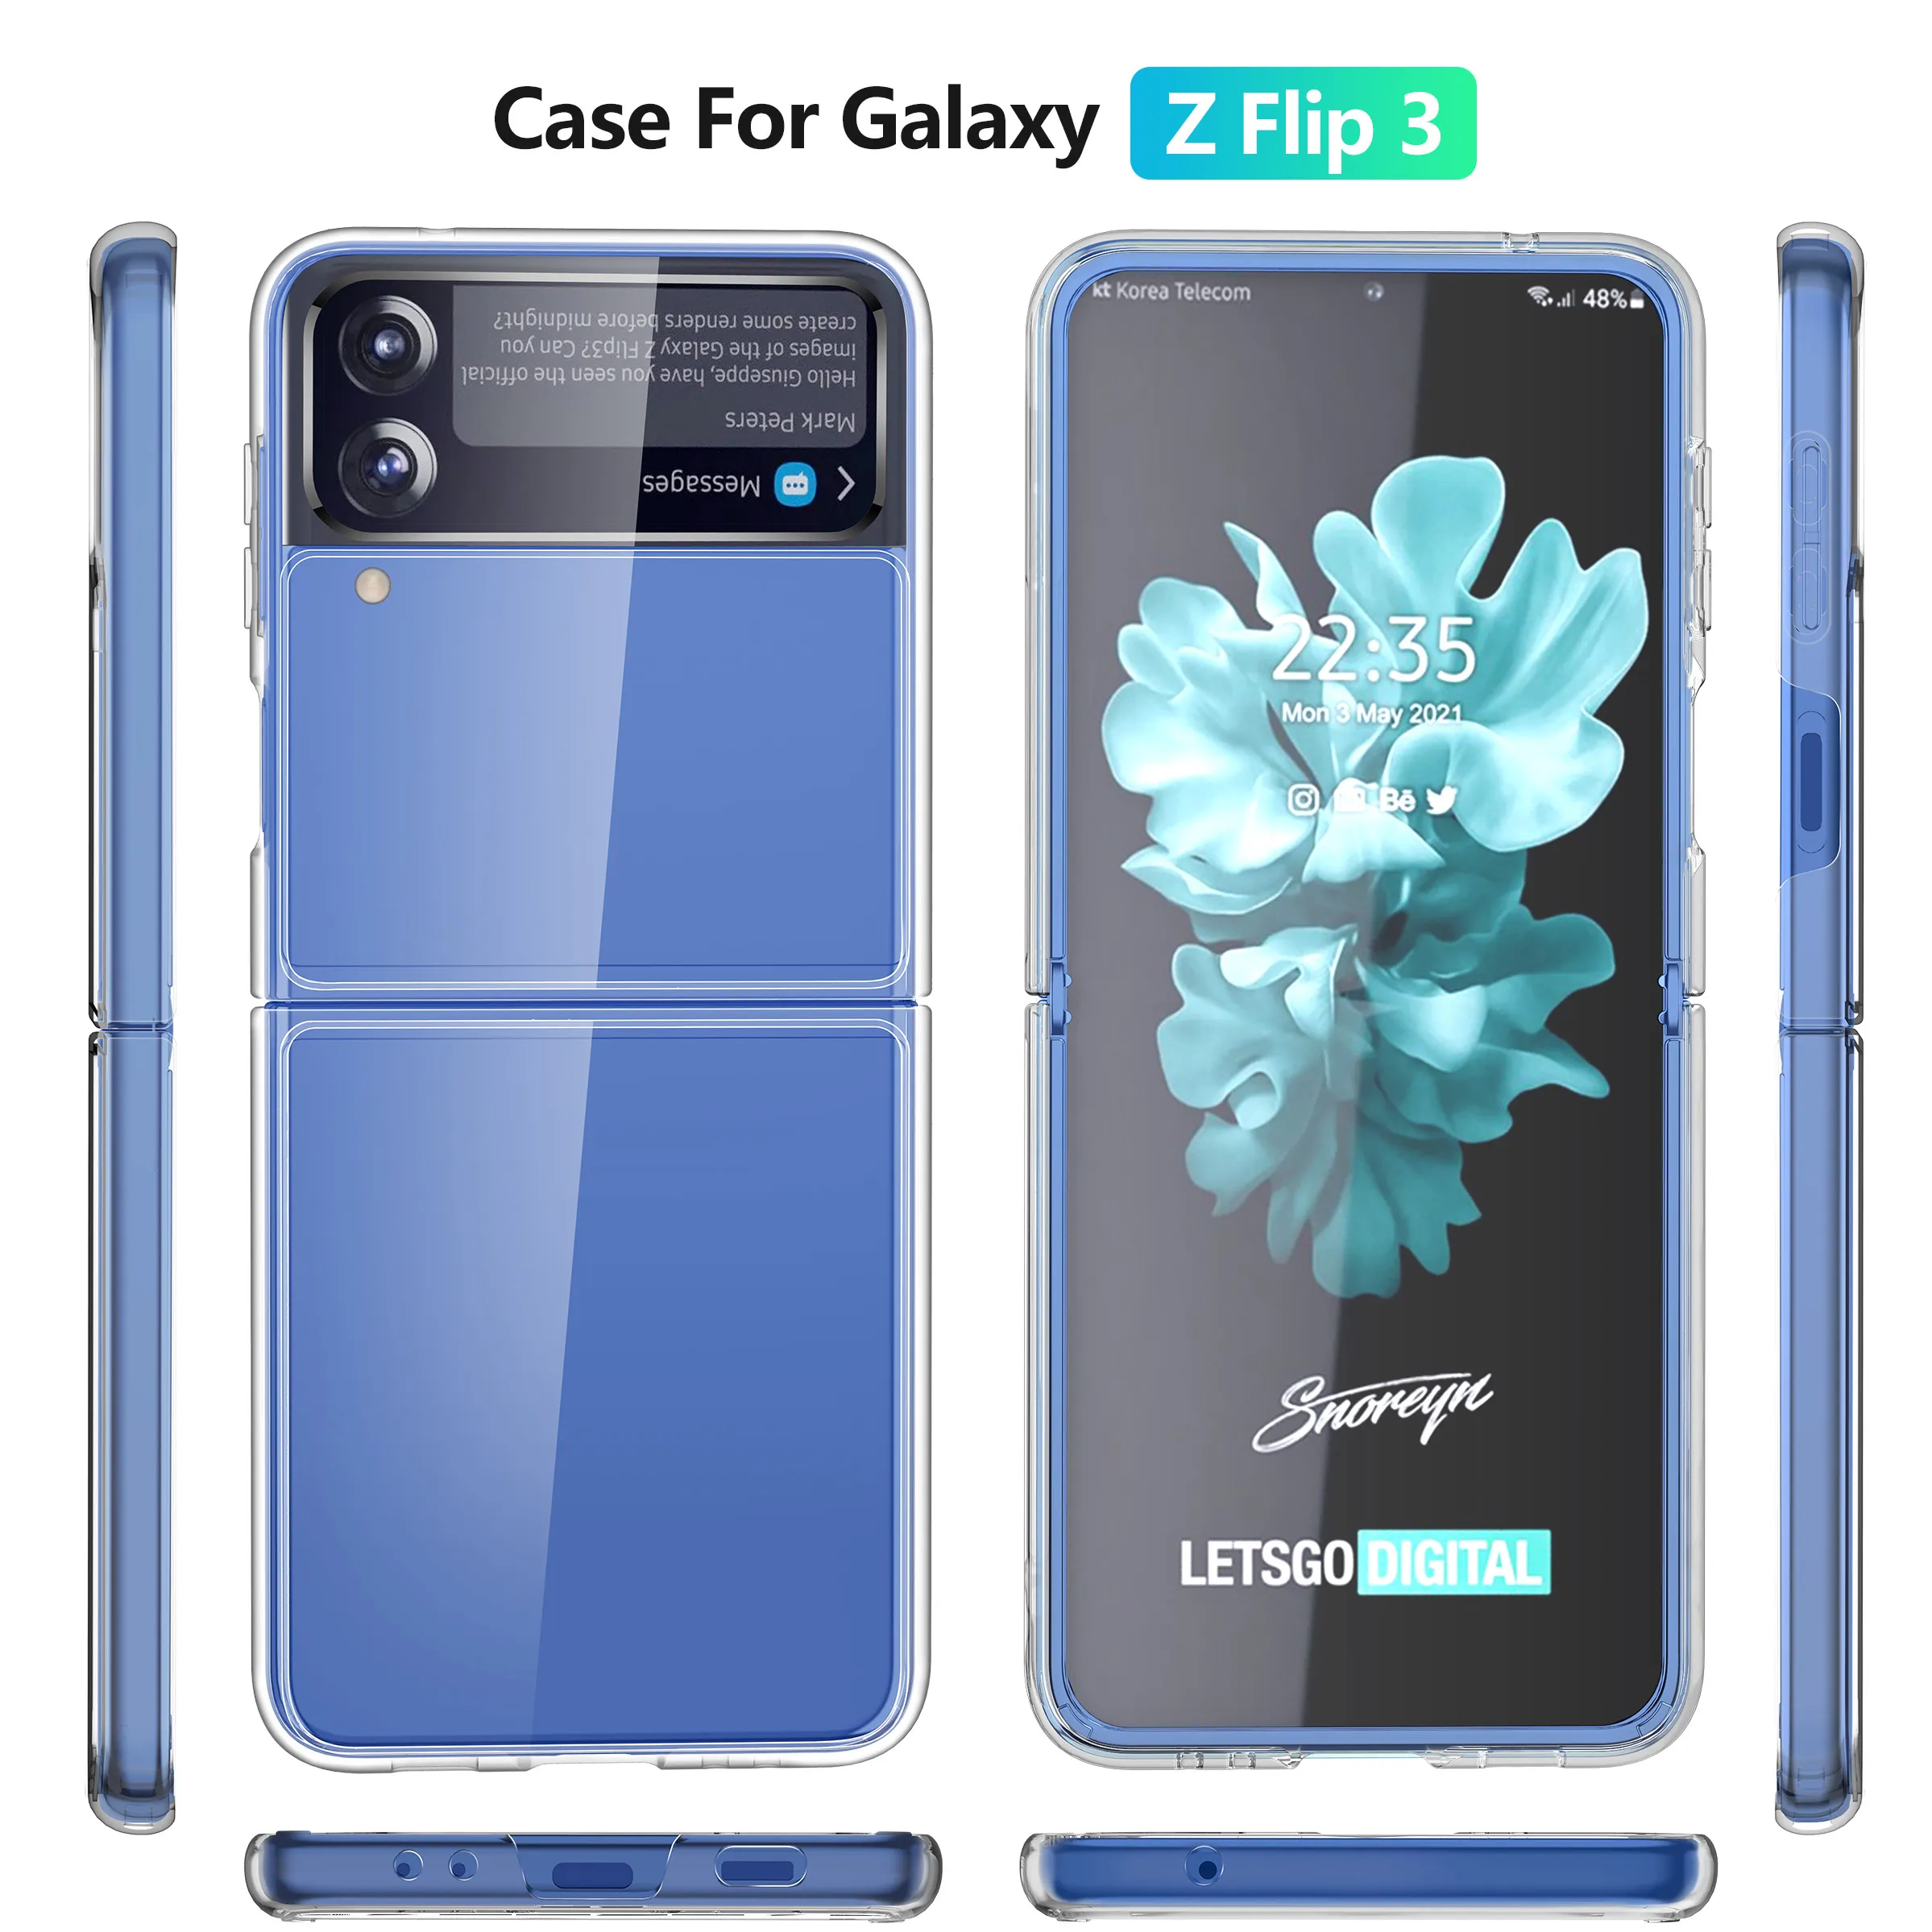 Zachte silicium TPU/PC celulaire cases voor Samsung Galaxy Z Flip 3 Fundas Capa Shockproof Crystal Clear Shell Achteromslag PLIP 3